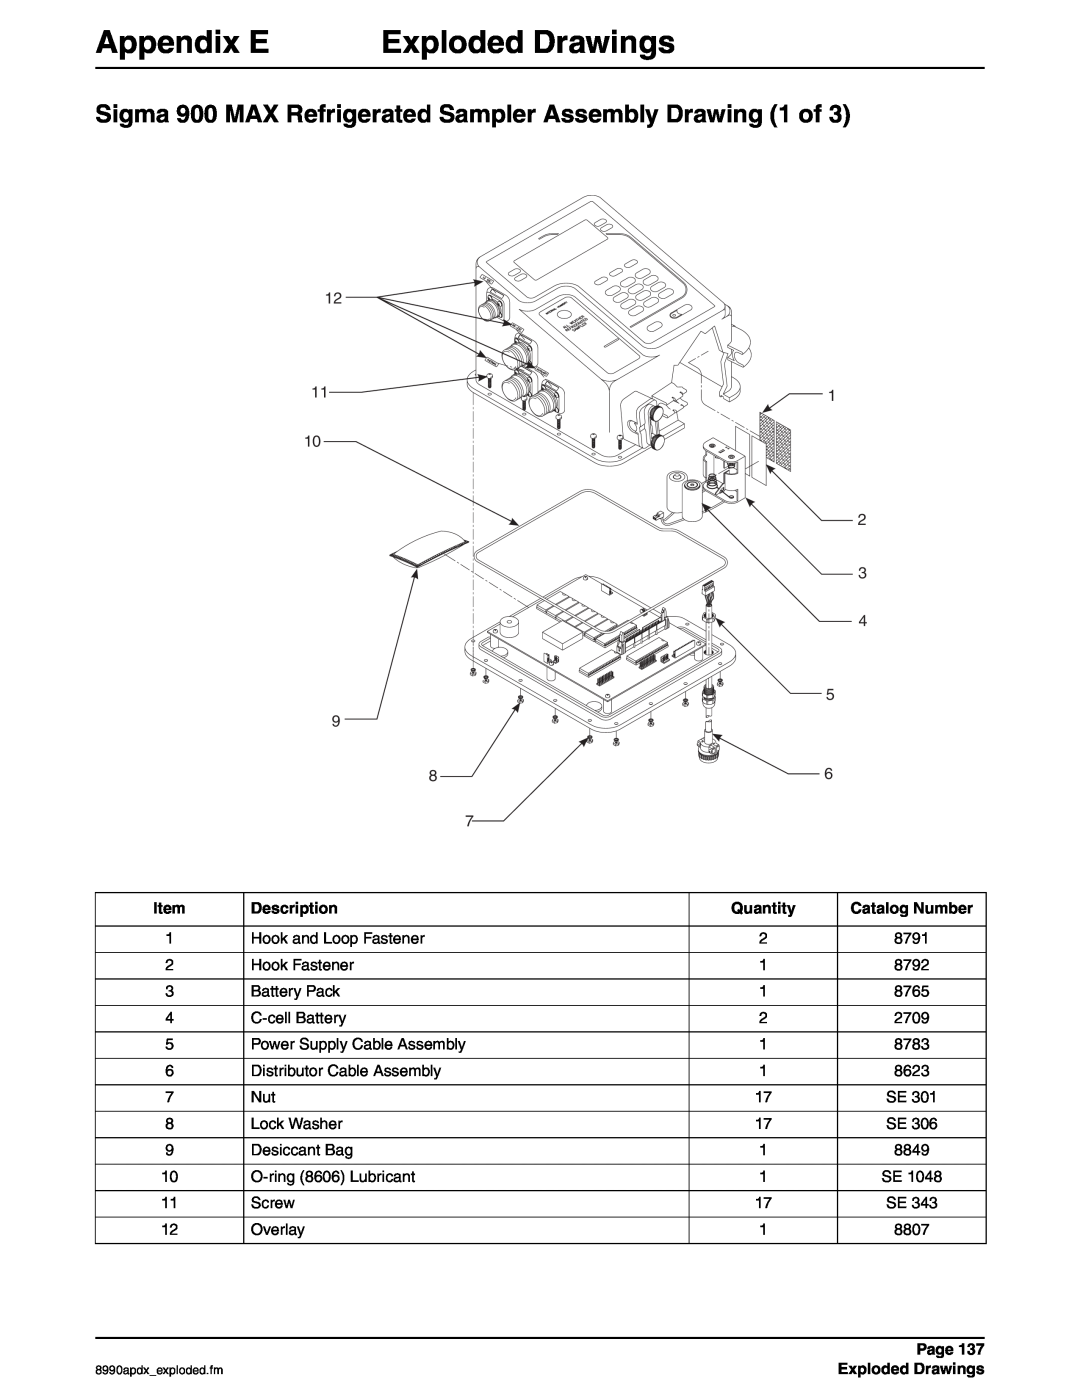 Hach 900 MAX manual Appendix E Exploded Drawings, Item, Description, Quantity, Catalog Number, Page 